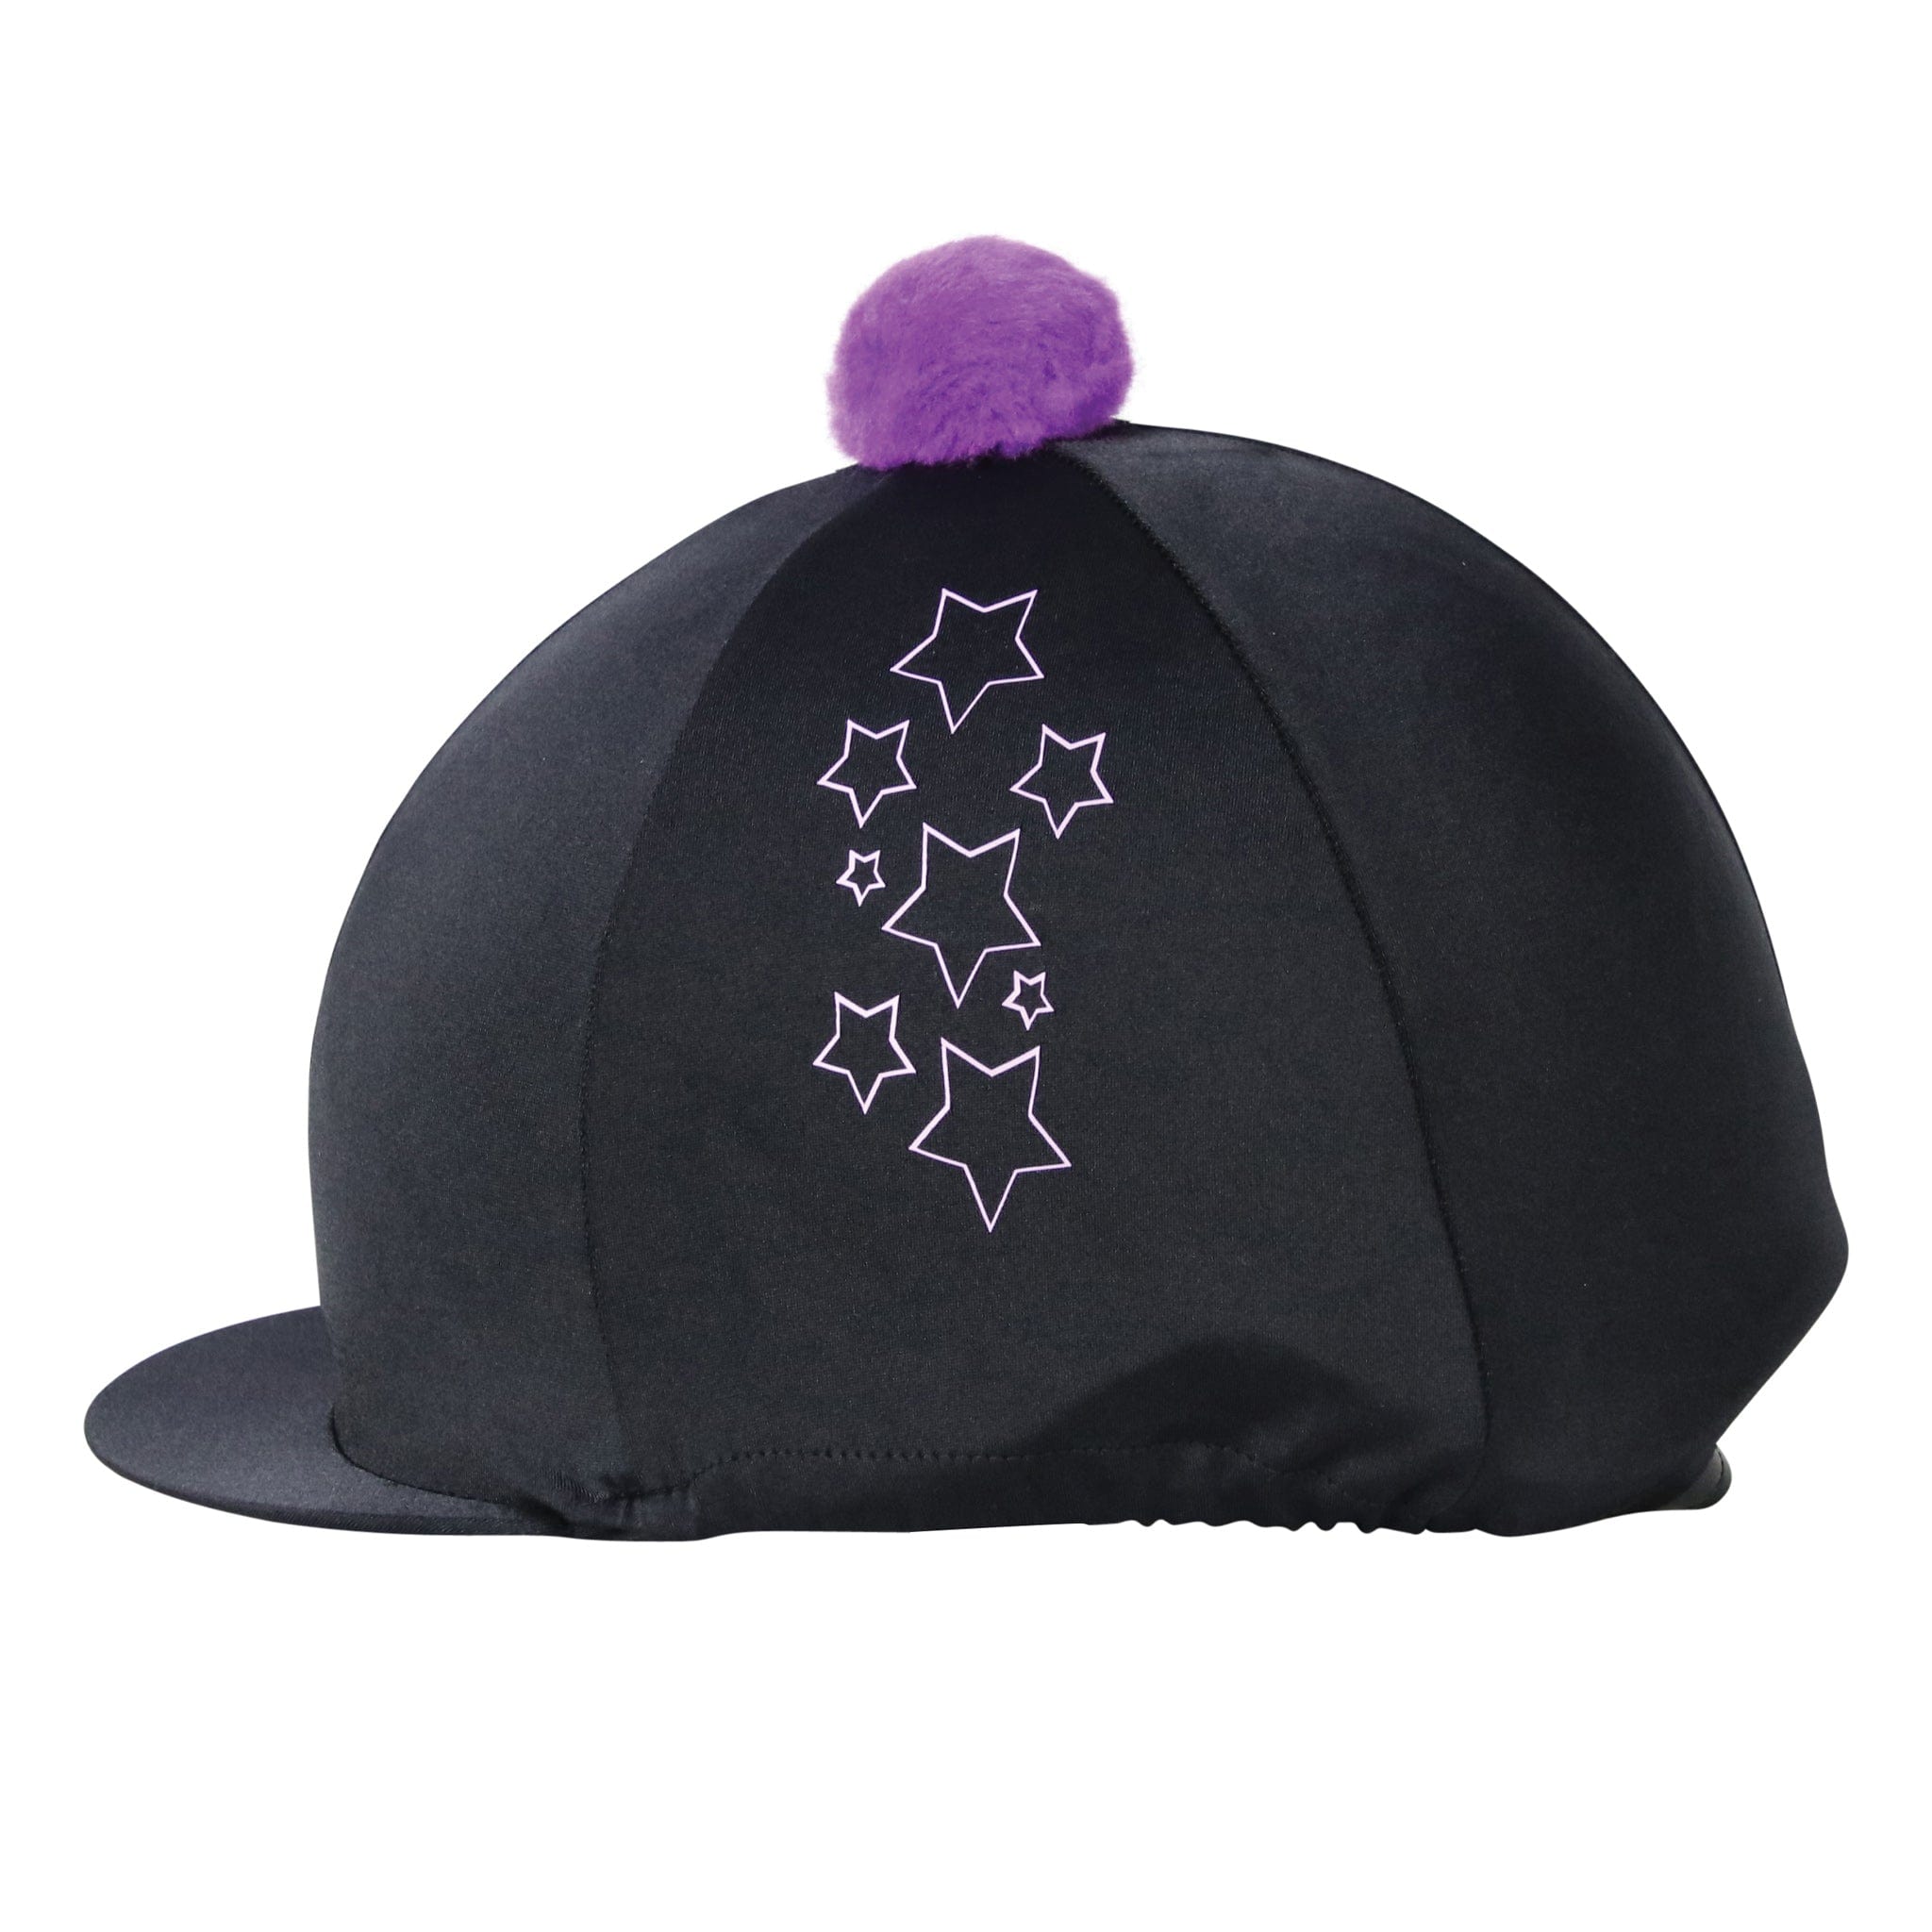 Hy Equestrian Children's Stella Hat Cover 27878 Black and Purple